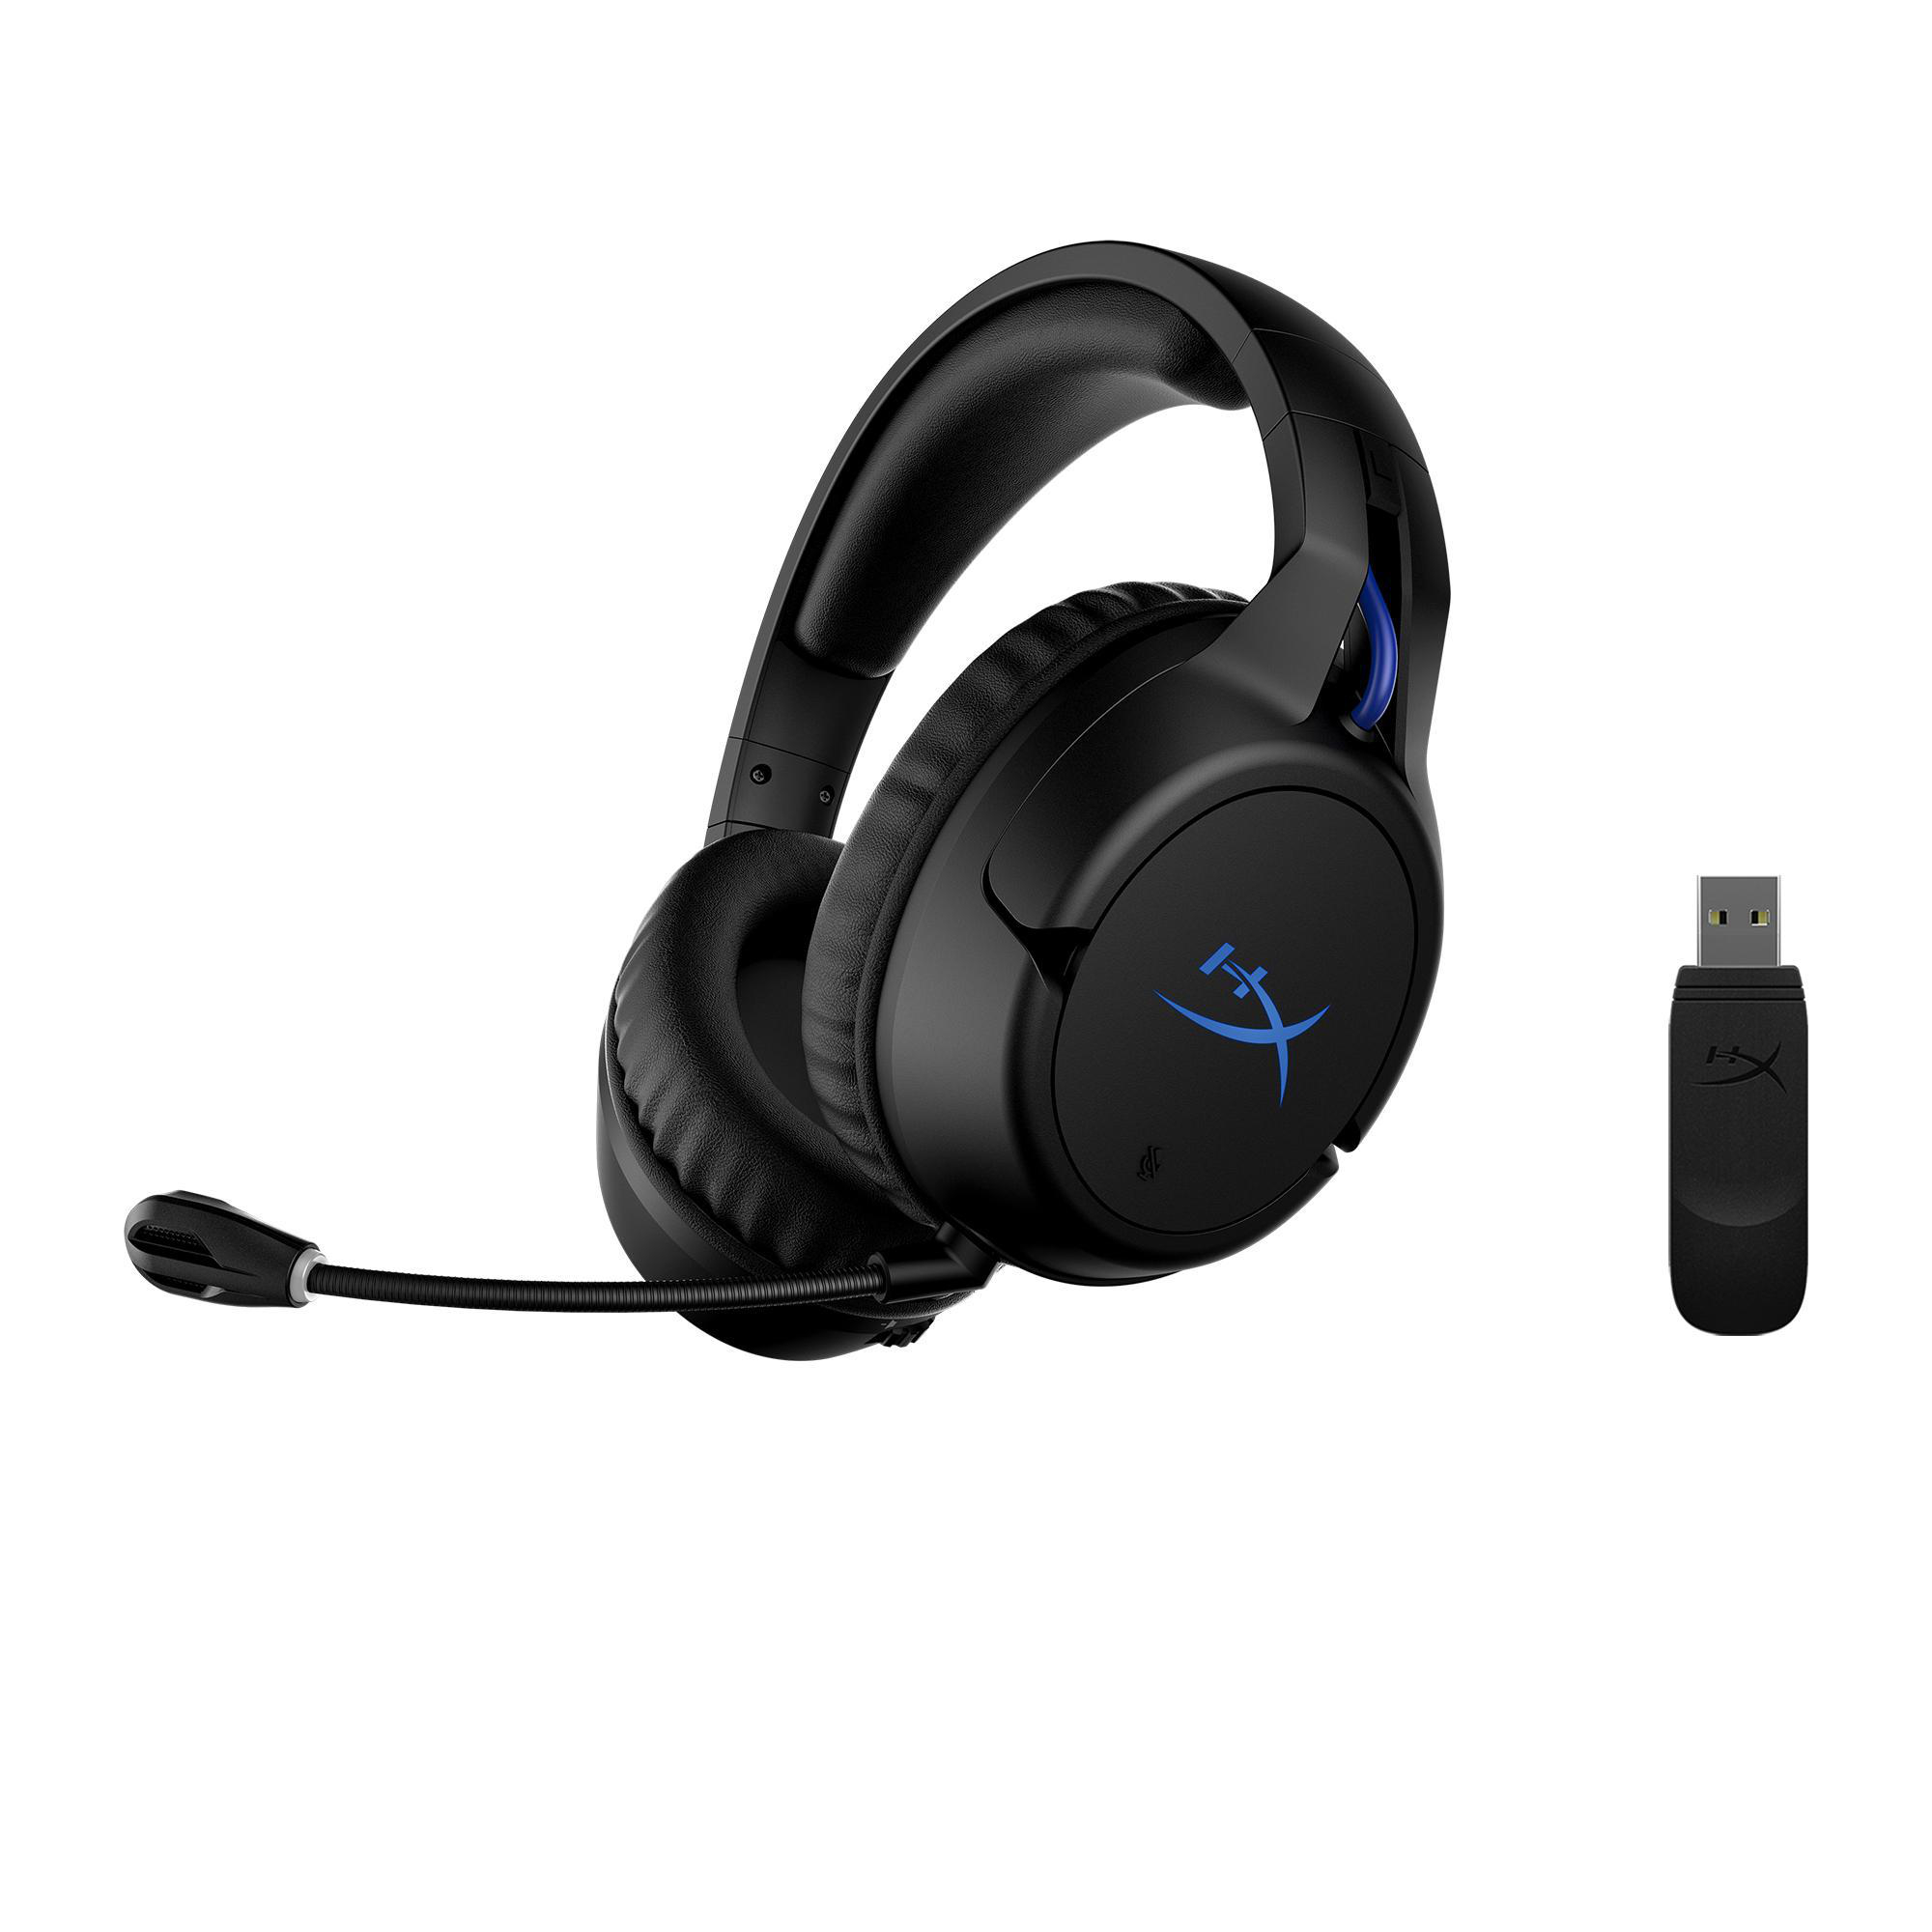 Cloud HYPERX Gaming kabelloses Over-ear Flight Gaming-Headset, Schwarz Bluetooth Headset